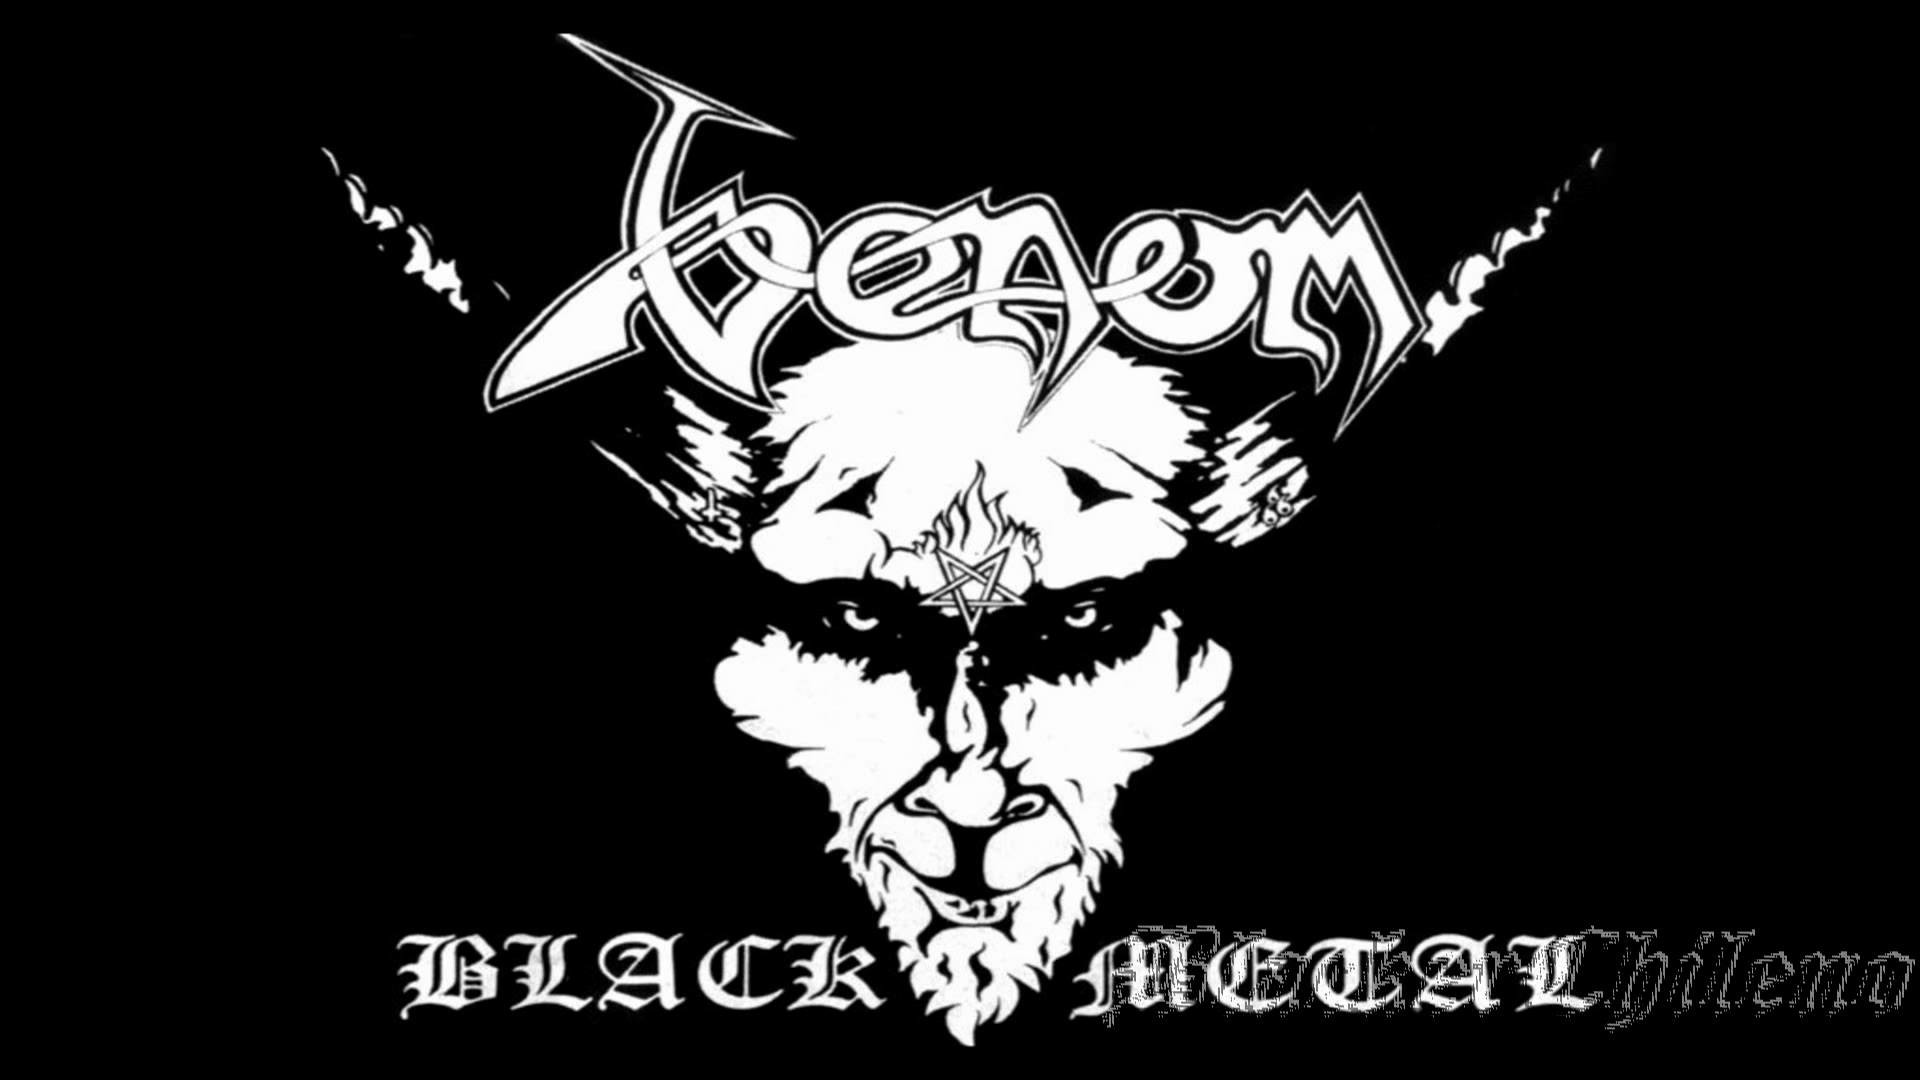 1920x1080 Venom - Black Metal